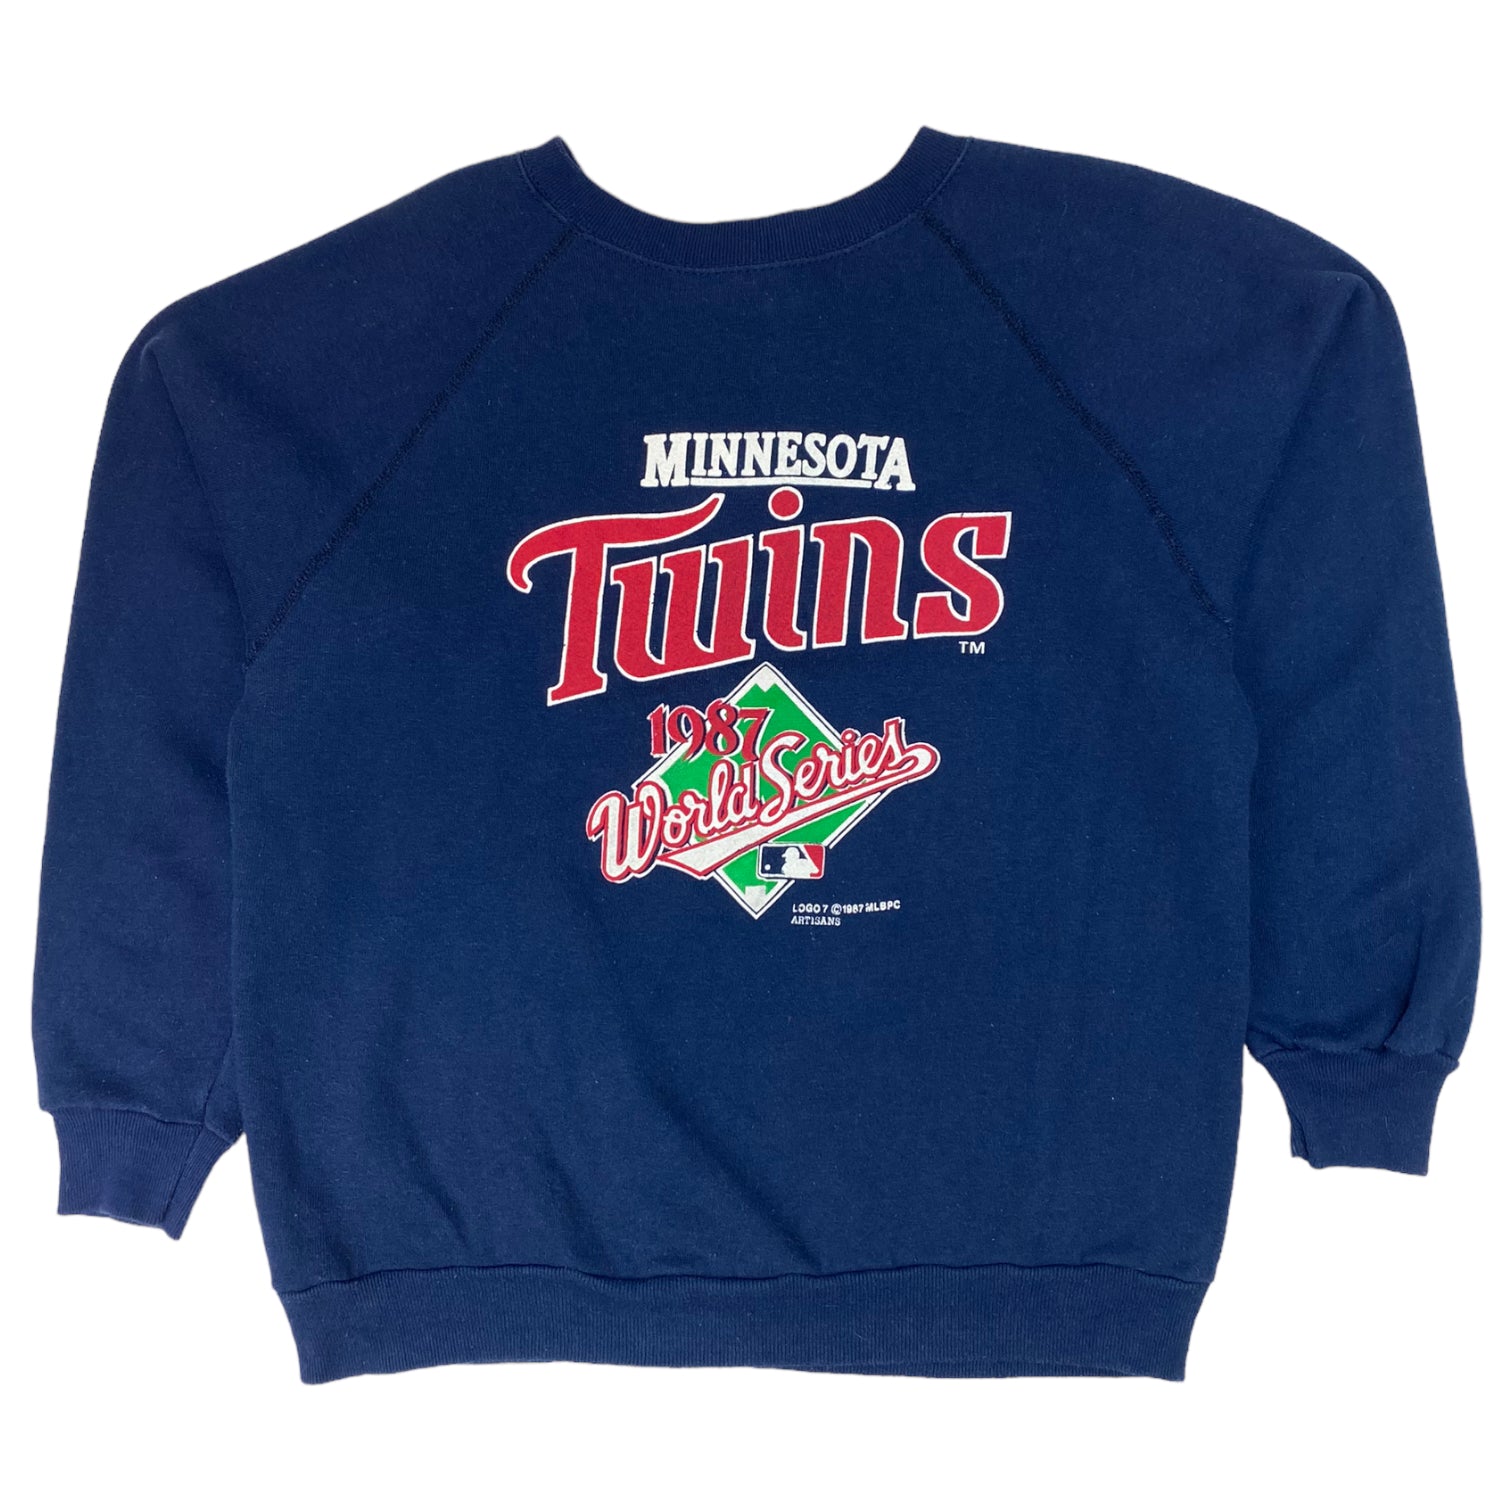 1987 World Series Crewneck - Minnesota Twins Sports History, Blue